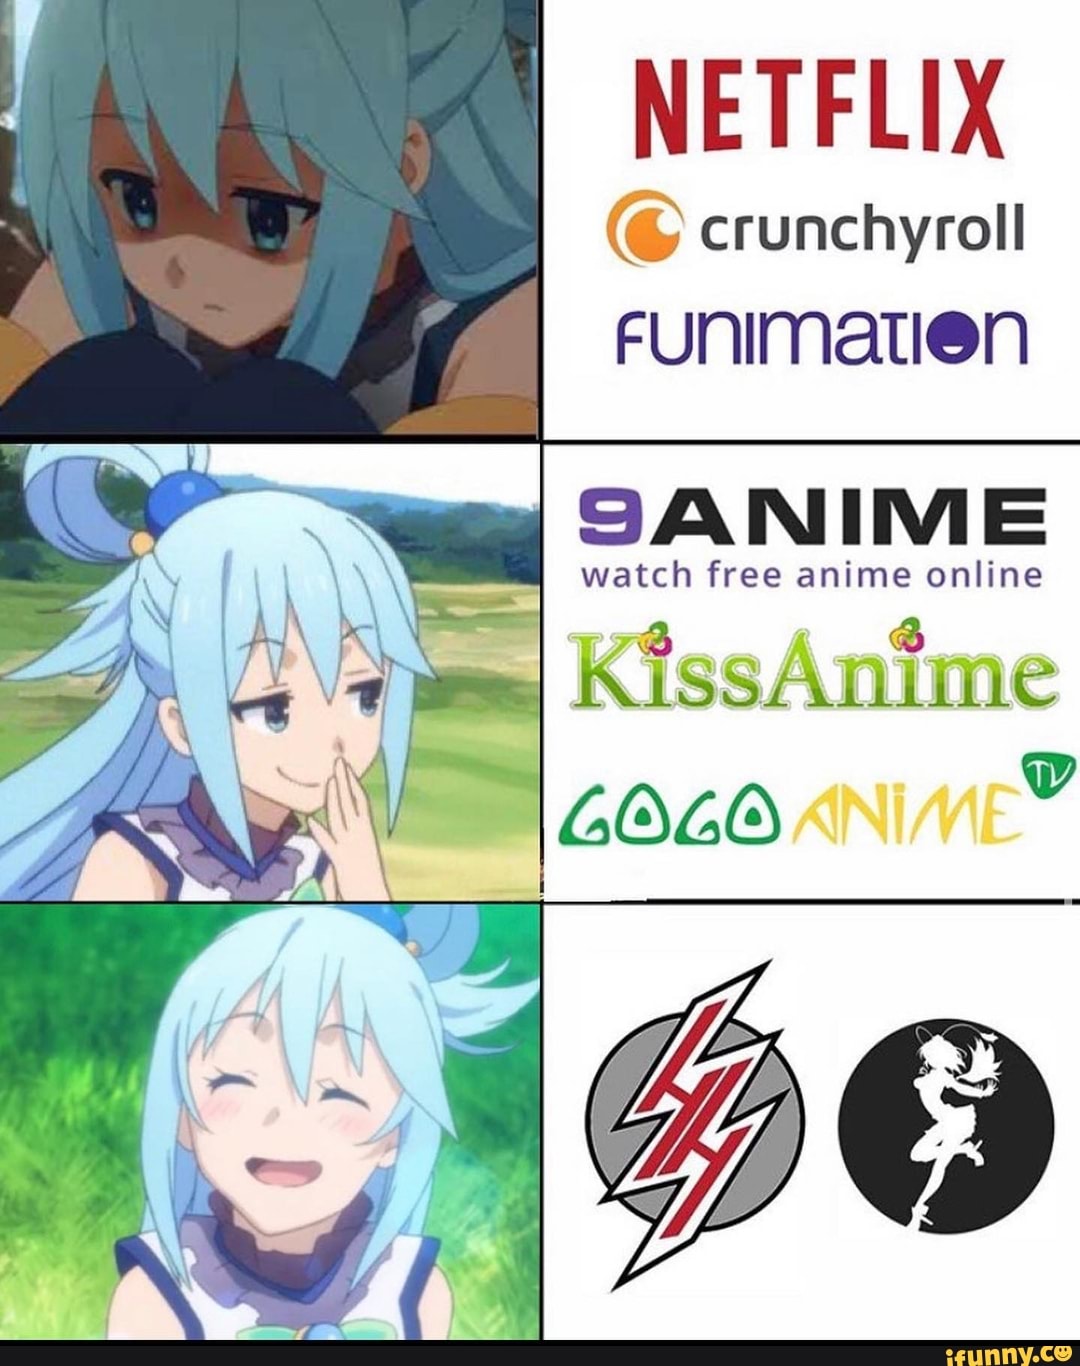 NETFLIX crunchyroll FUNIMATIEN SANIME watch free anime online